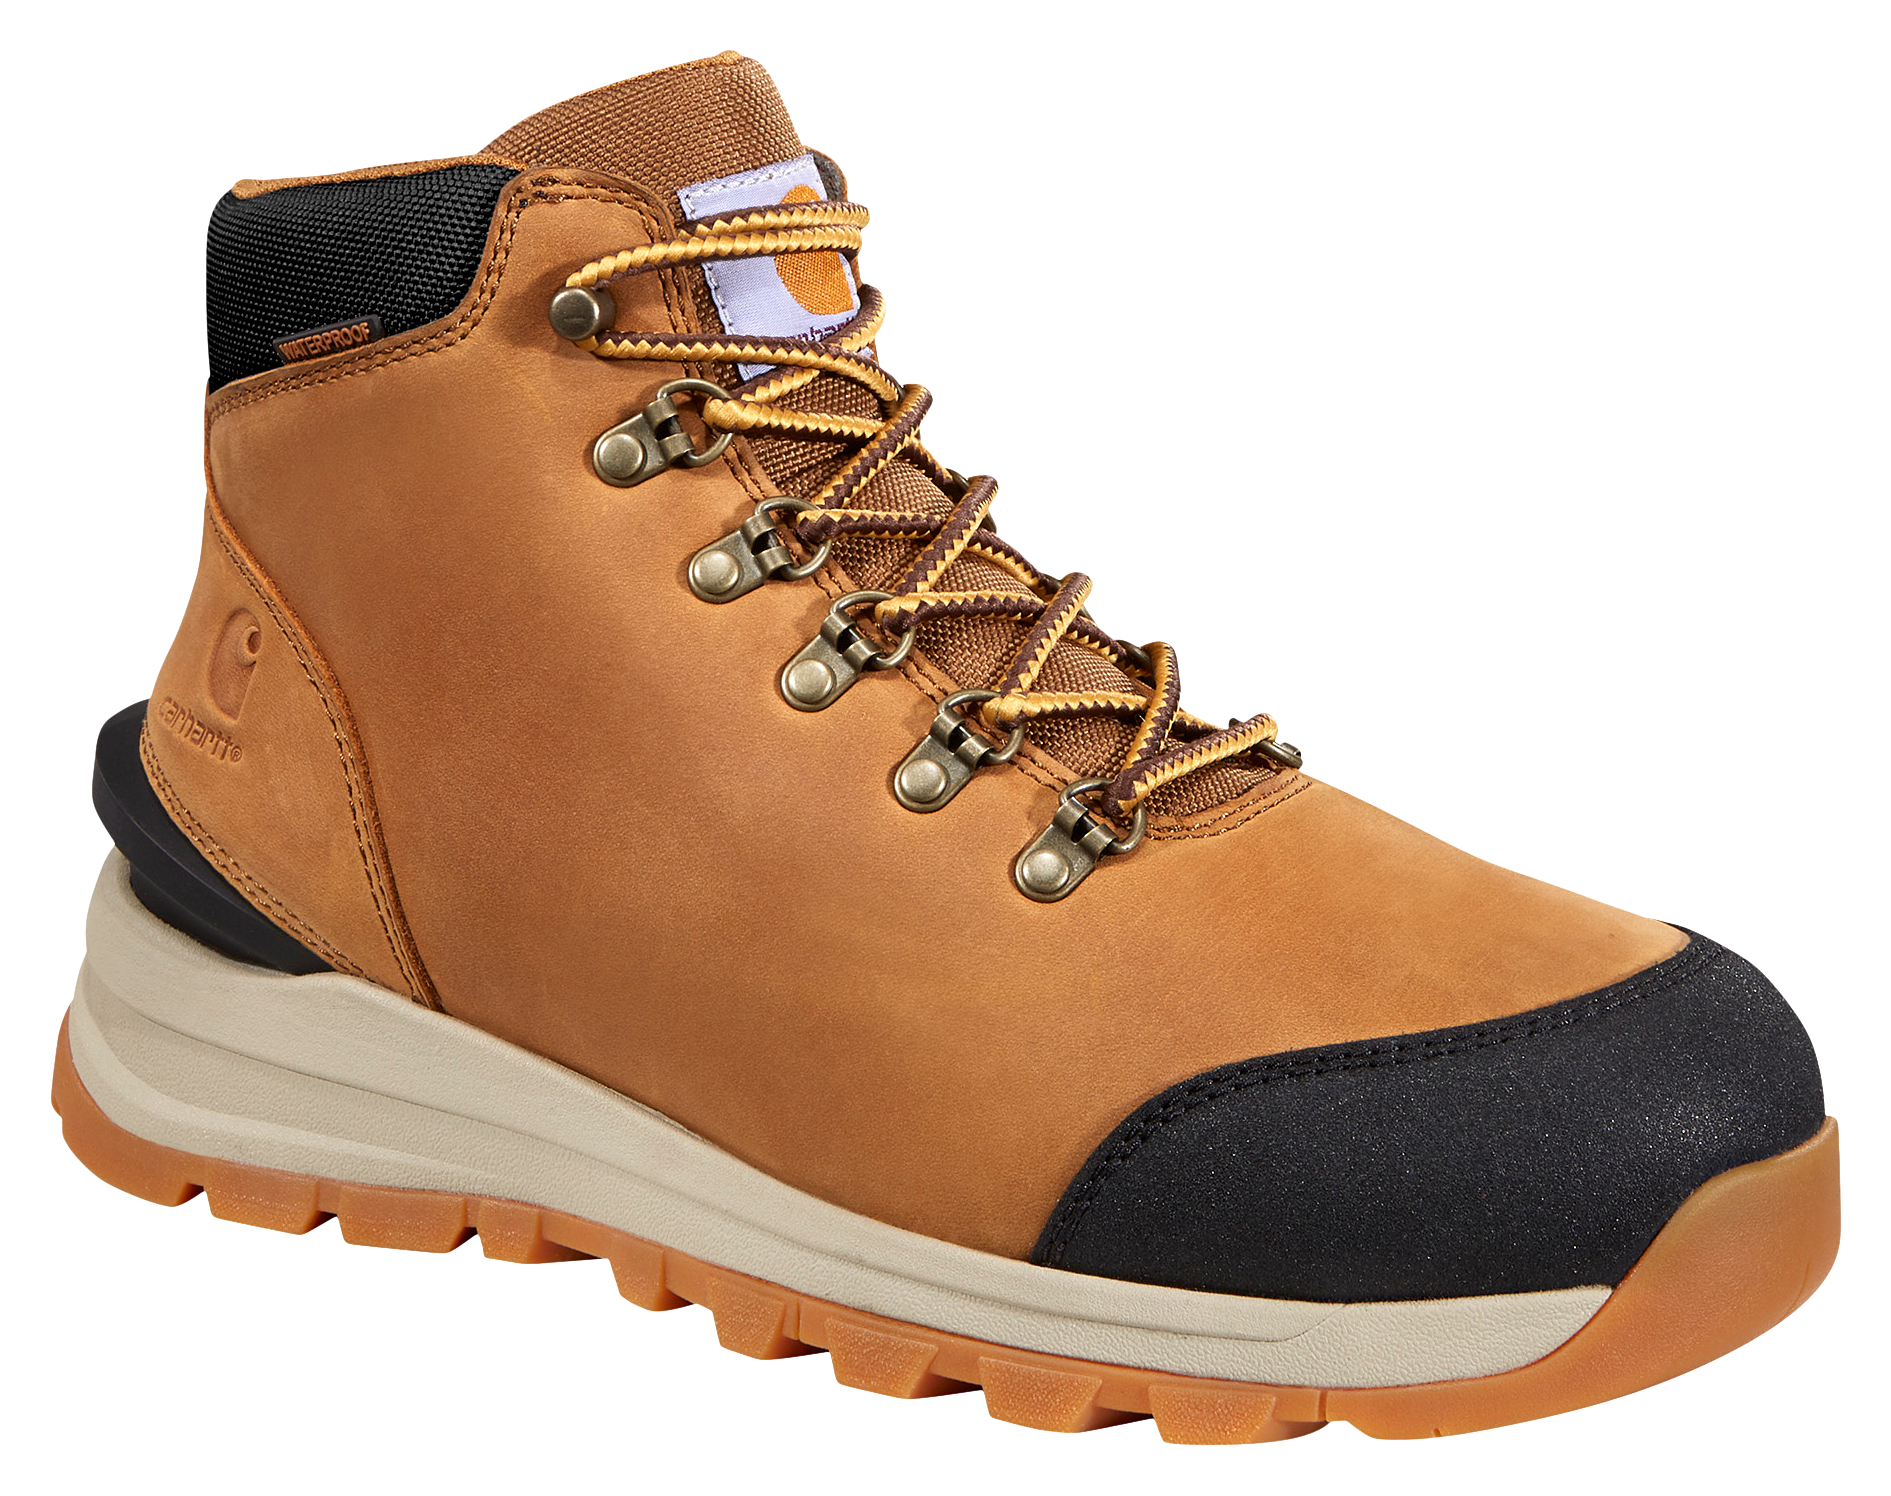 Carhartt Gilmore Waterproof Hiking Boots for Men - Brown - 13W